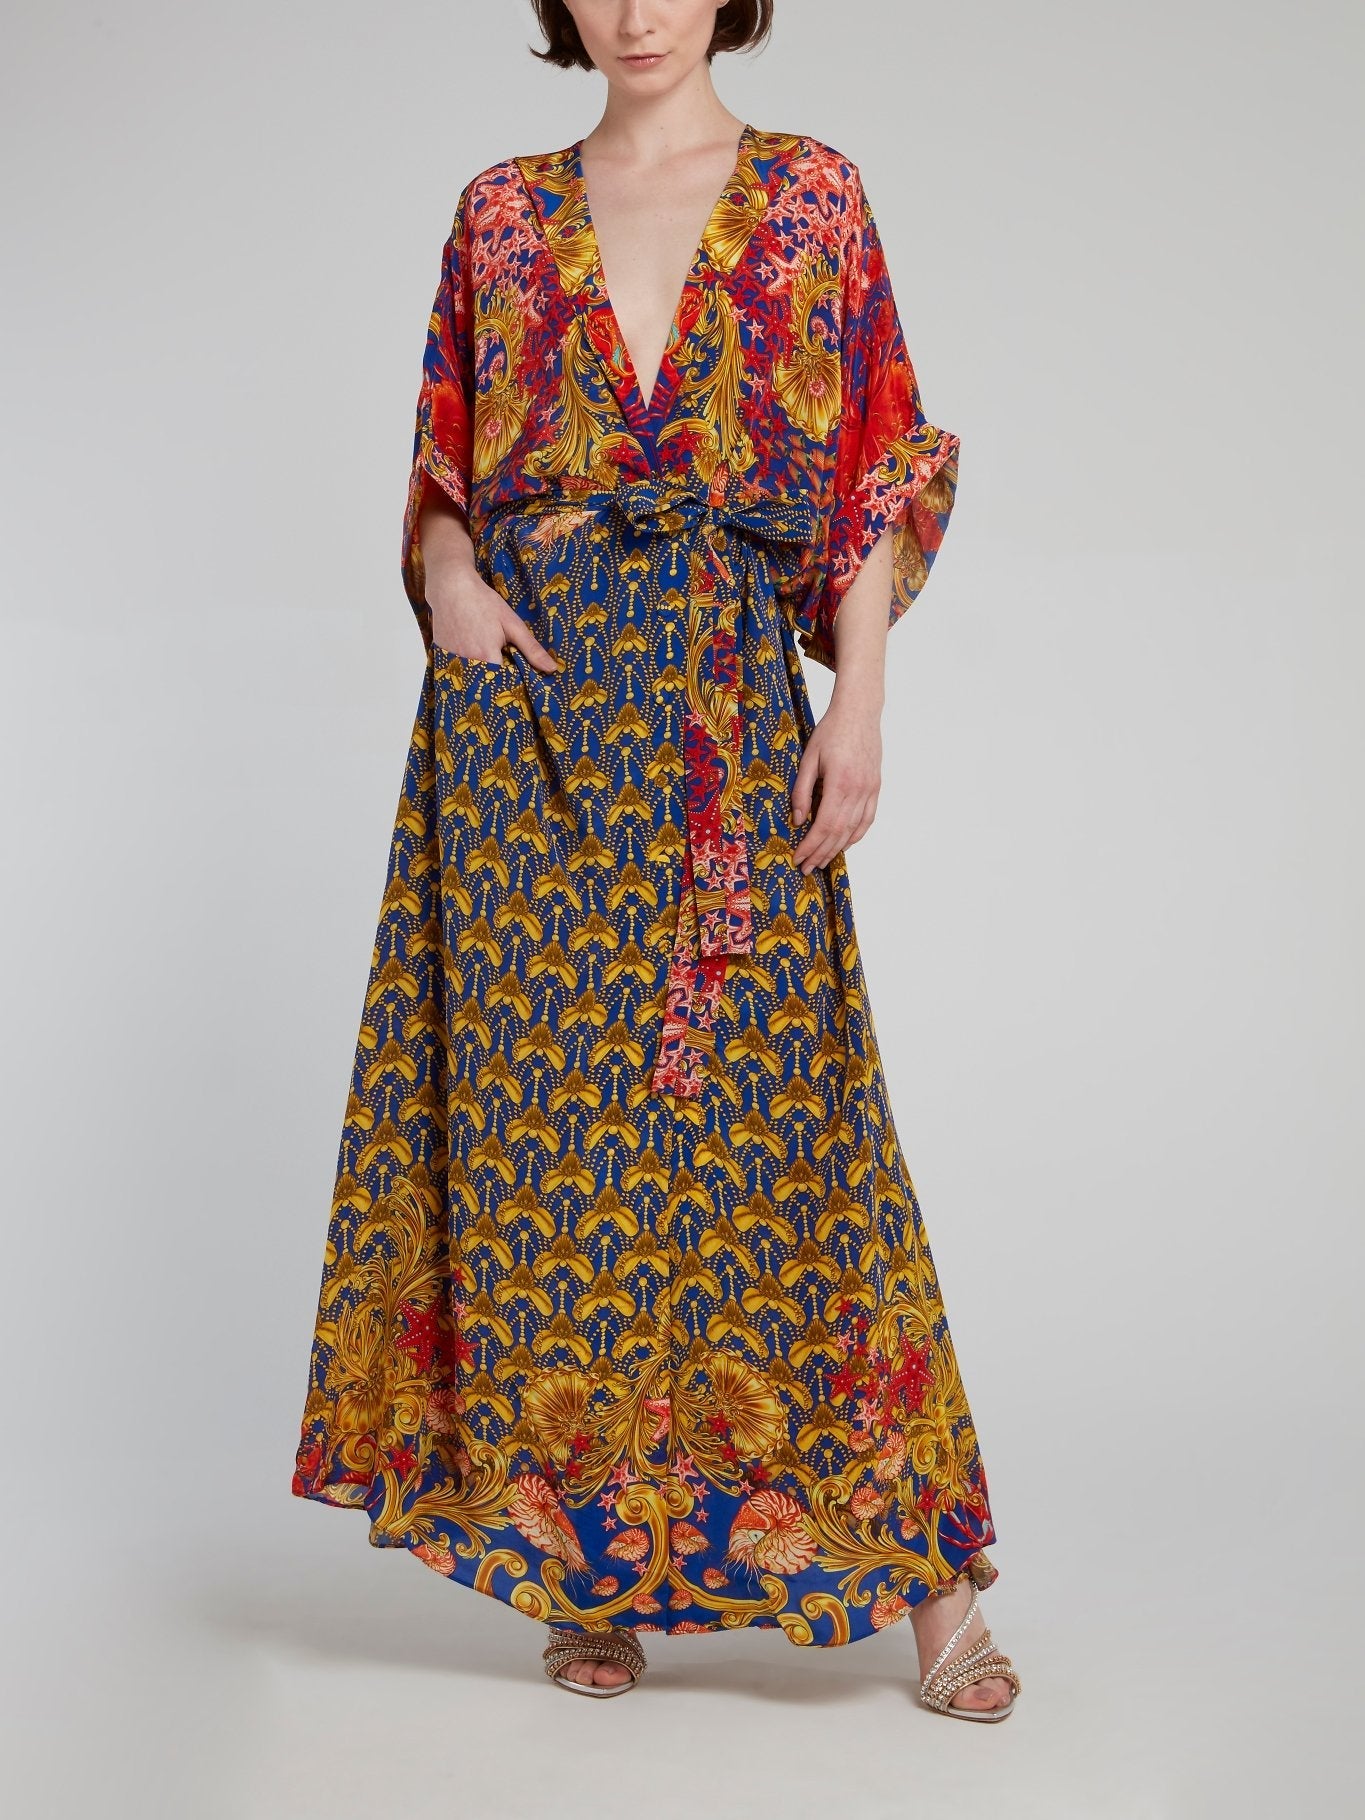 Baroque Print Kimono Cover Up Dress